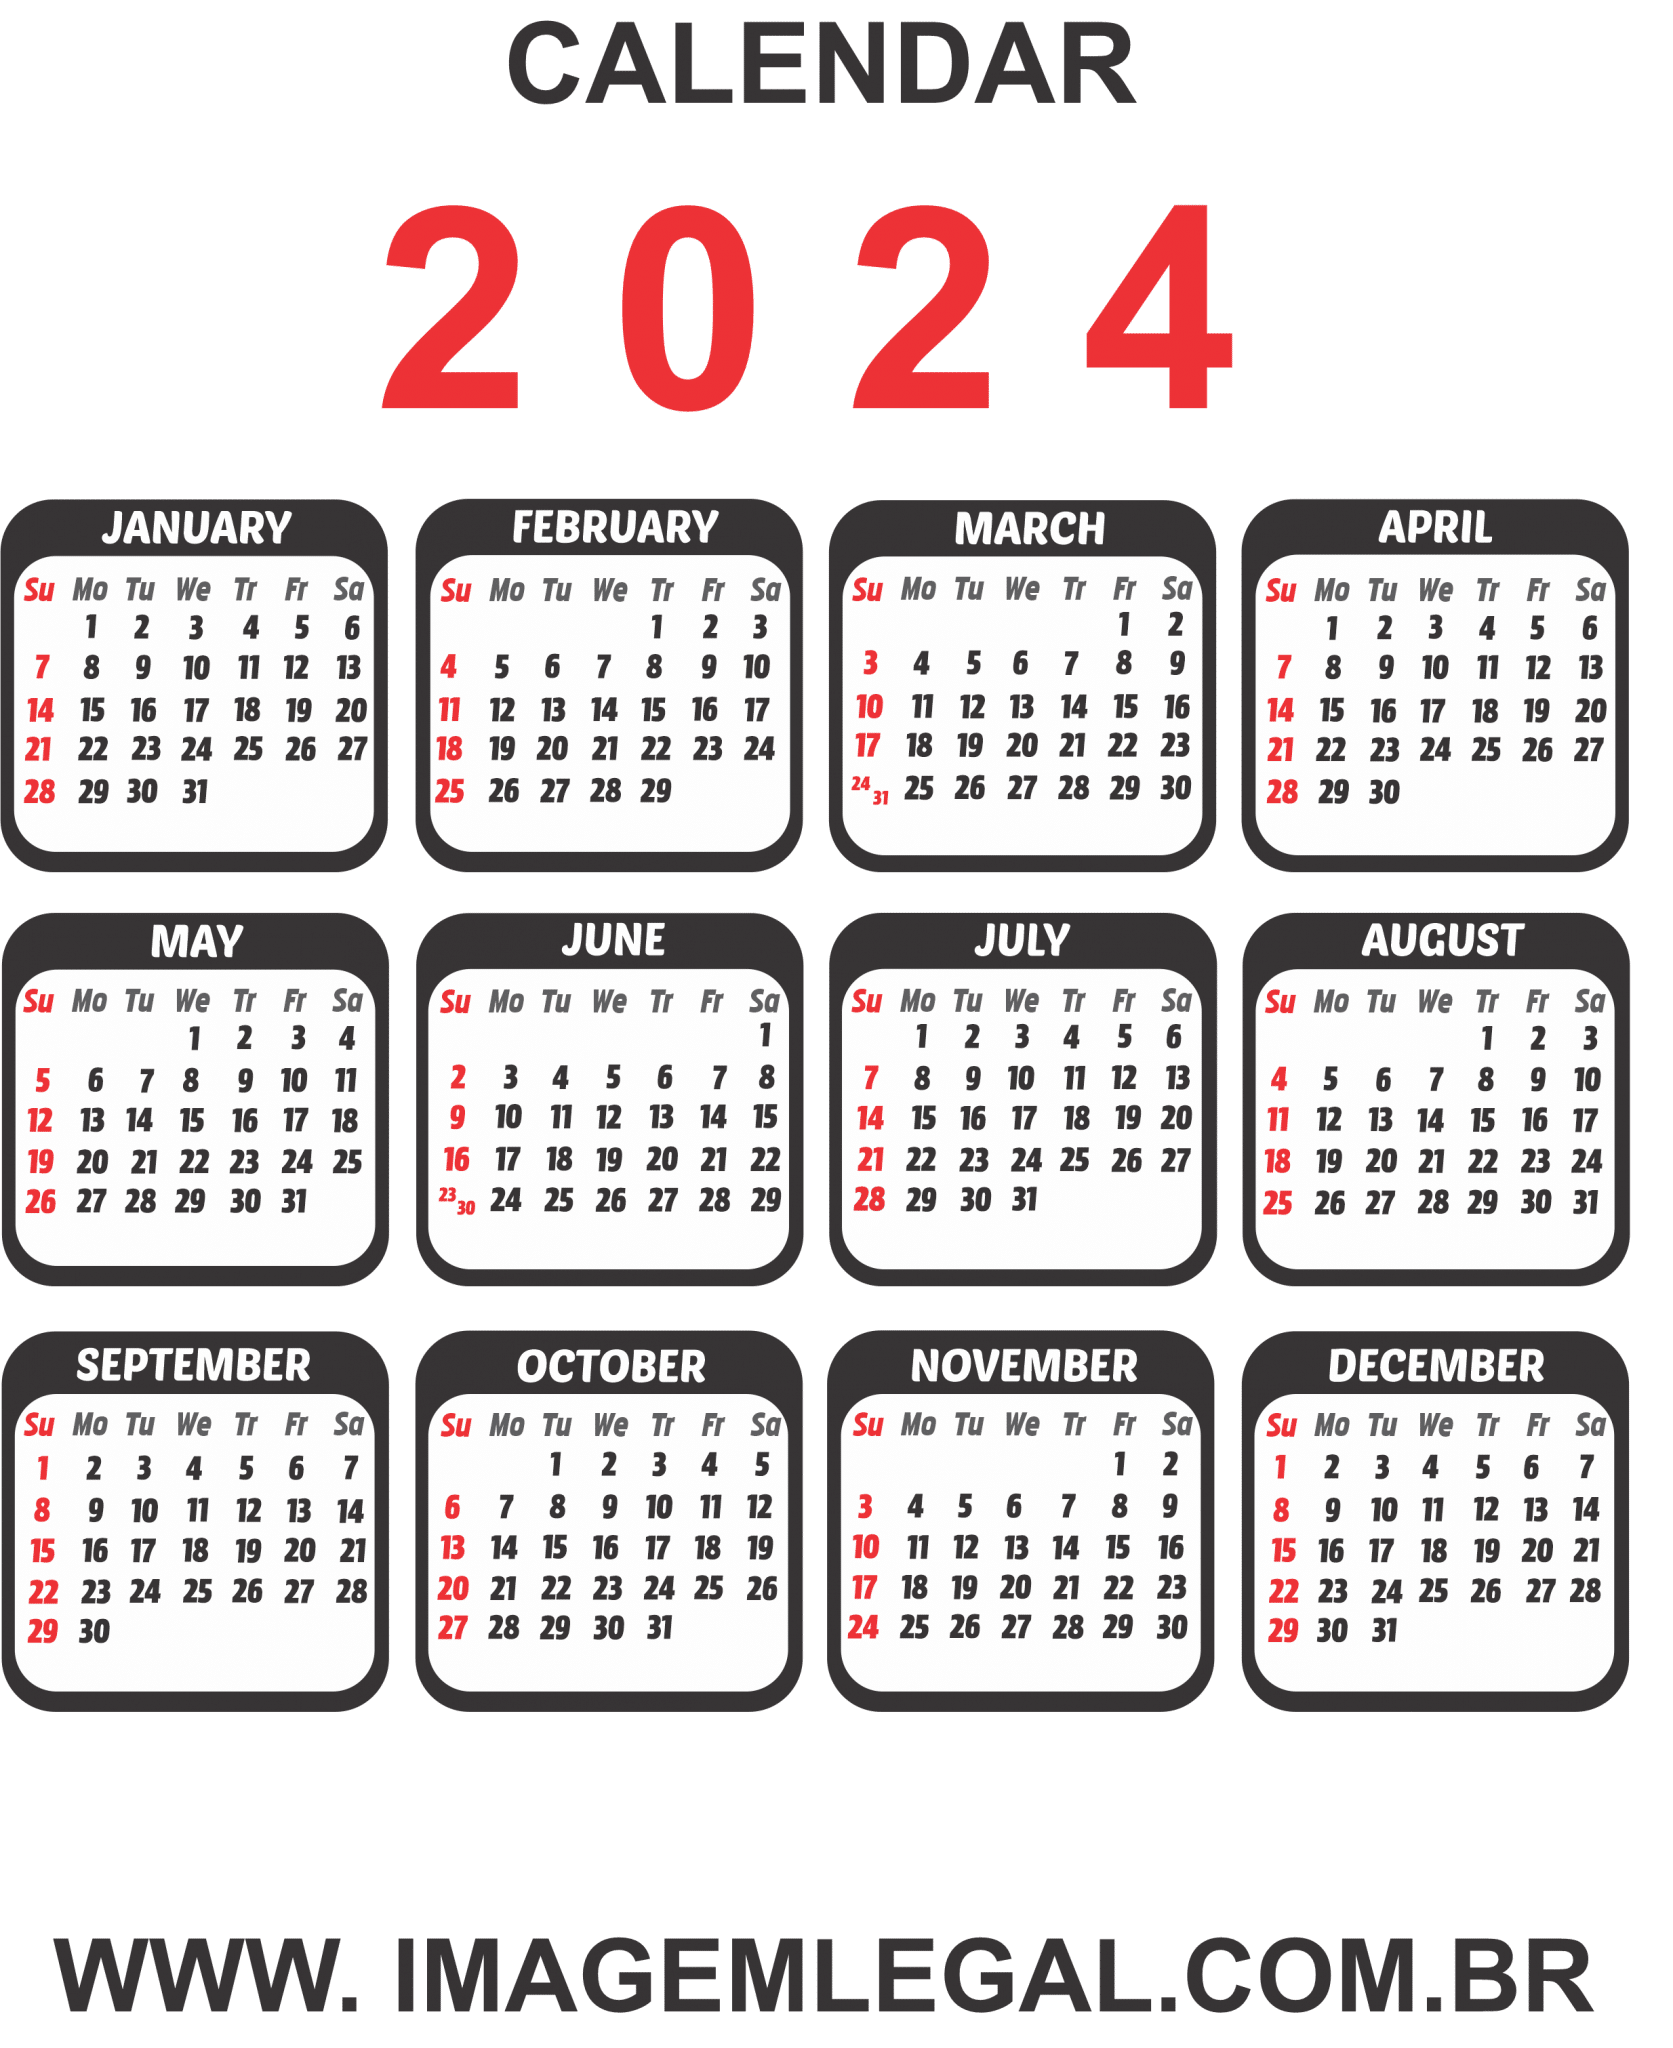 2024 Calendar Printable English Imagem Legal